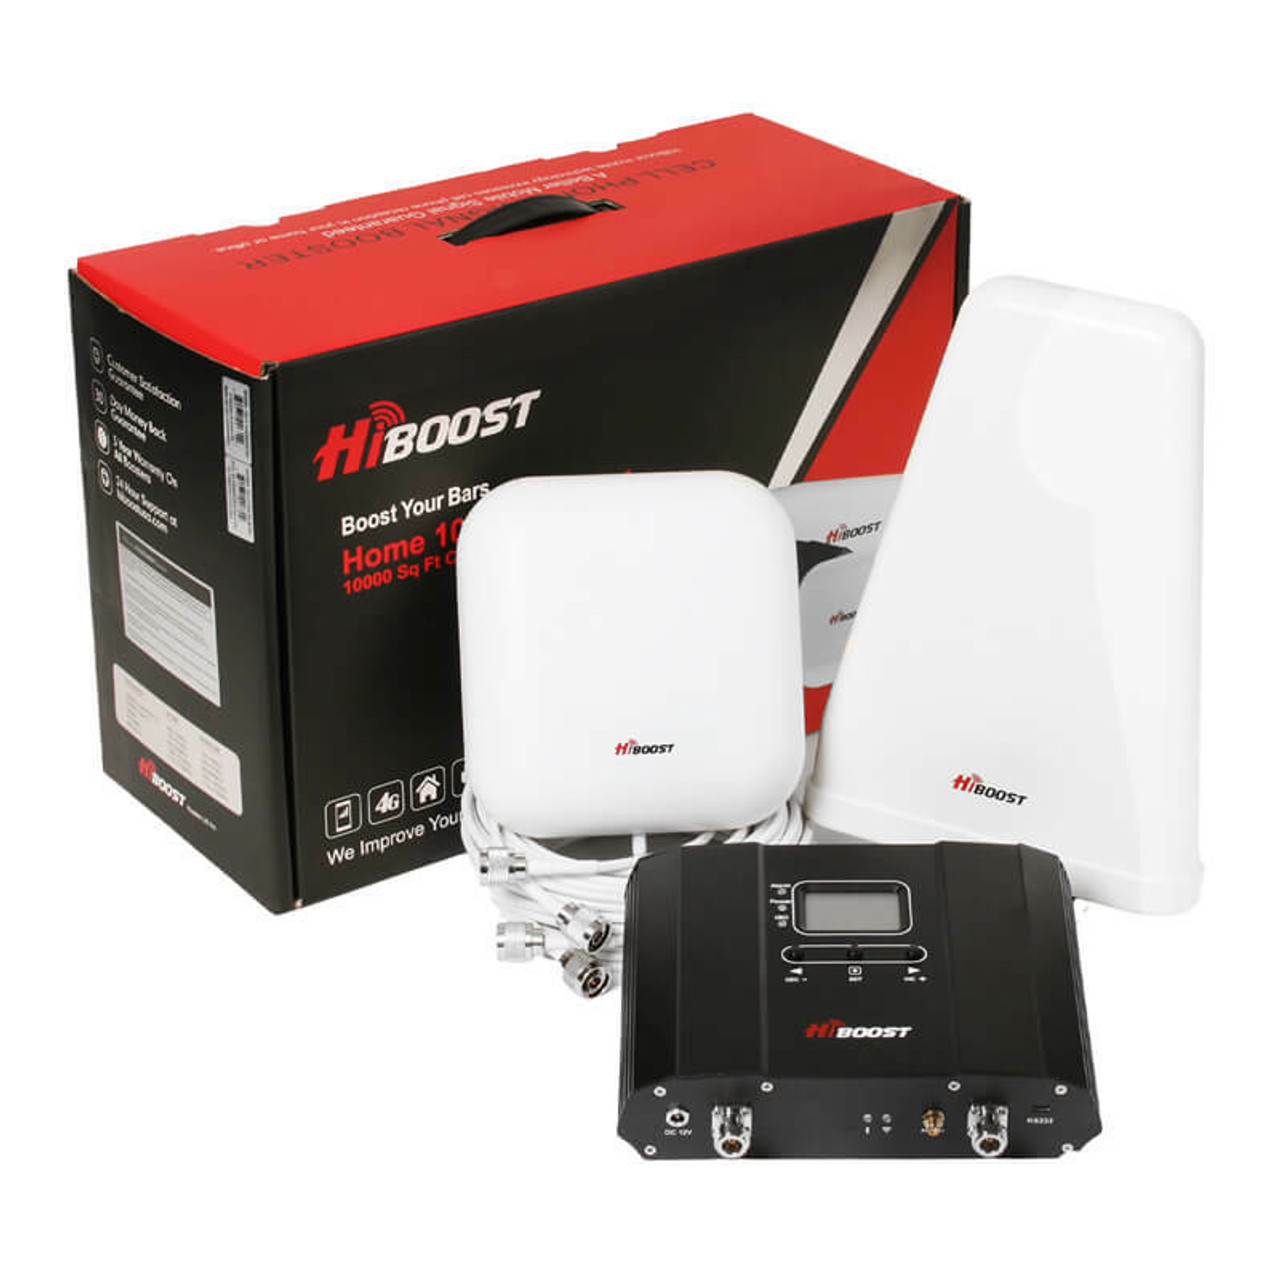 HiBoost Home 10K Smart Link Signal Booster Kit For Home/Office